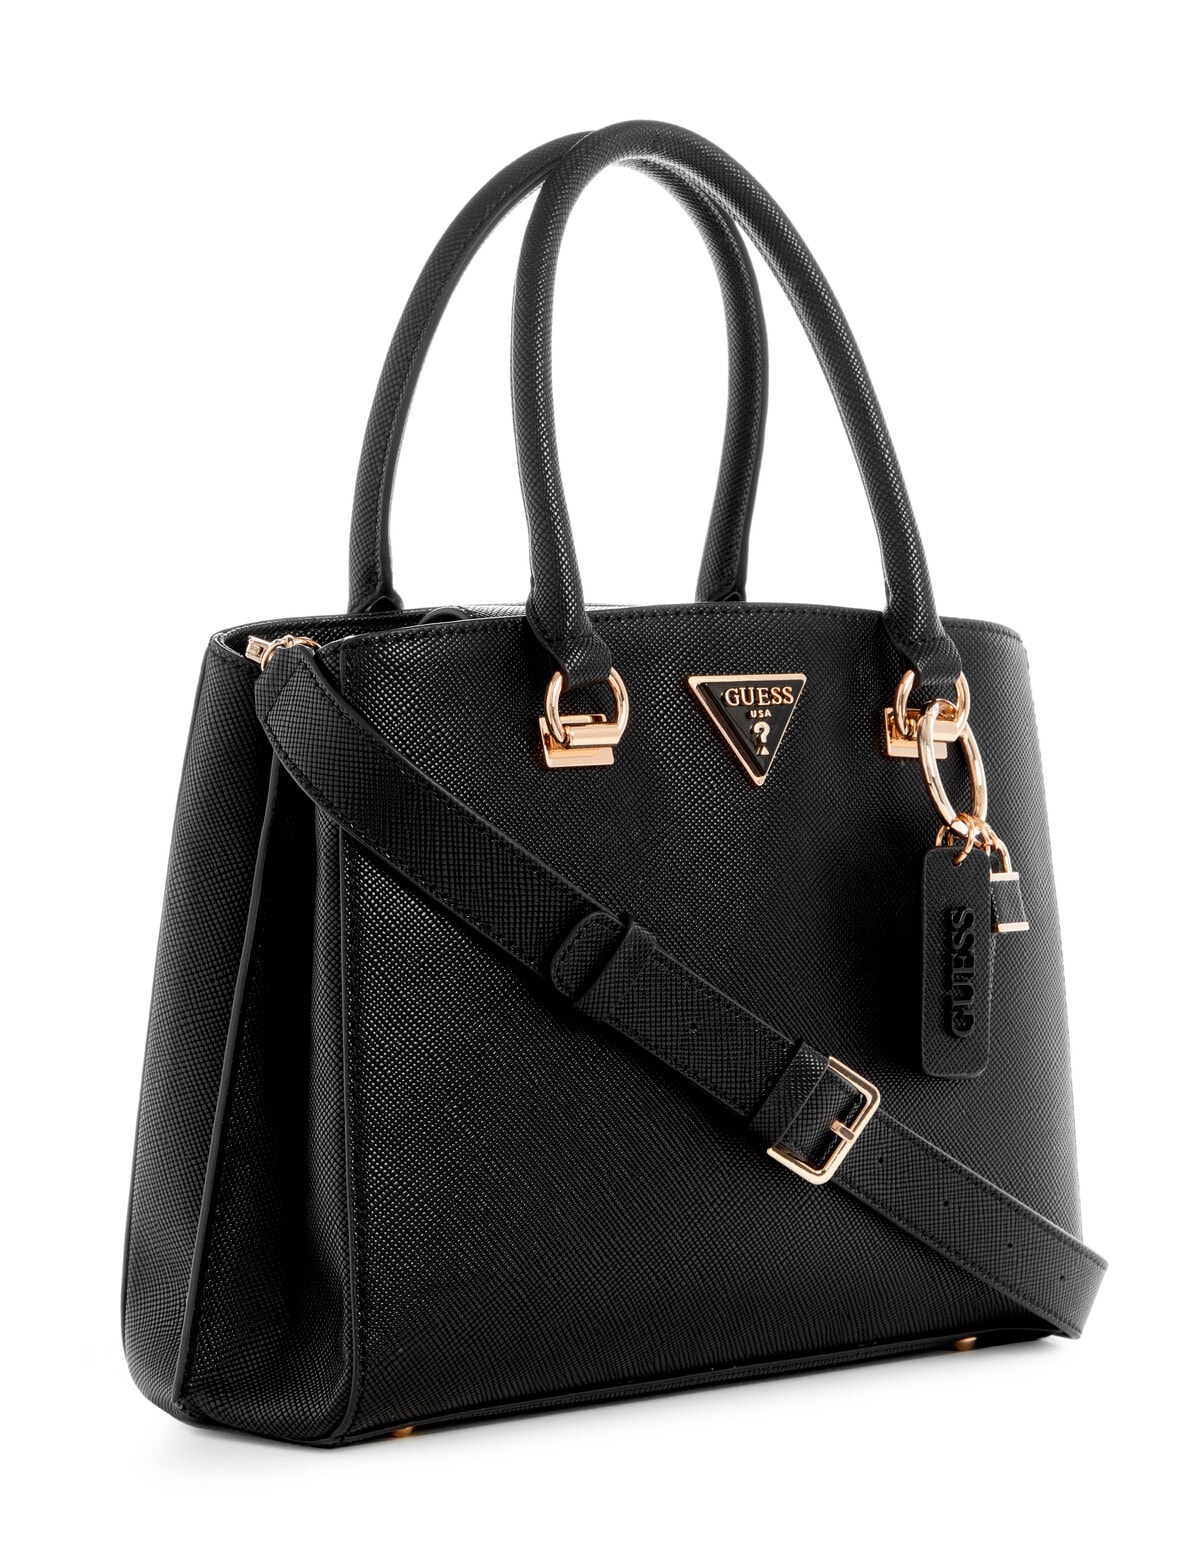 Guess Noelle Saffiano Purse - Women's Bags in Black | Buckle | Guess purses,  Purses, Small black purse